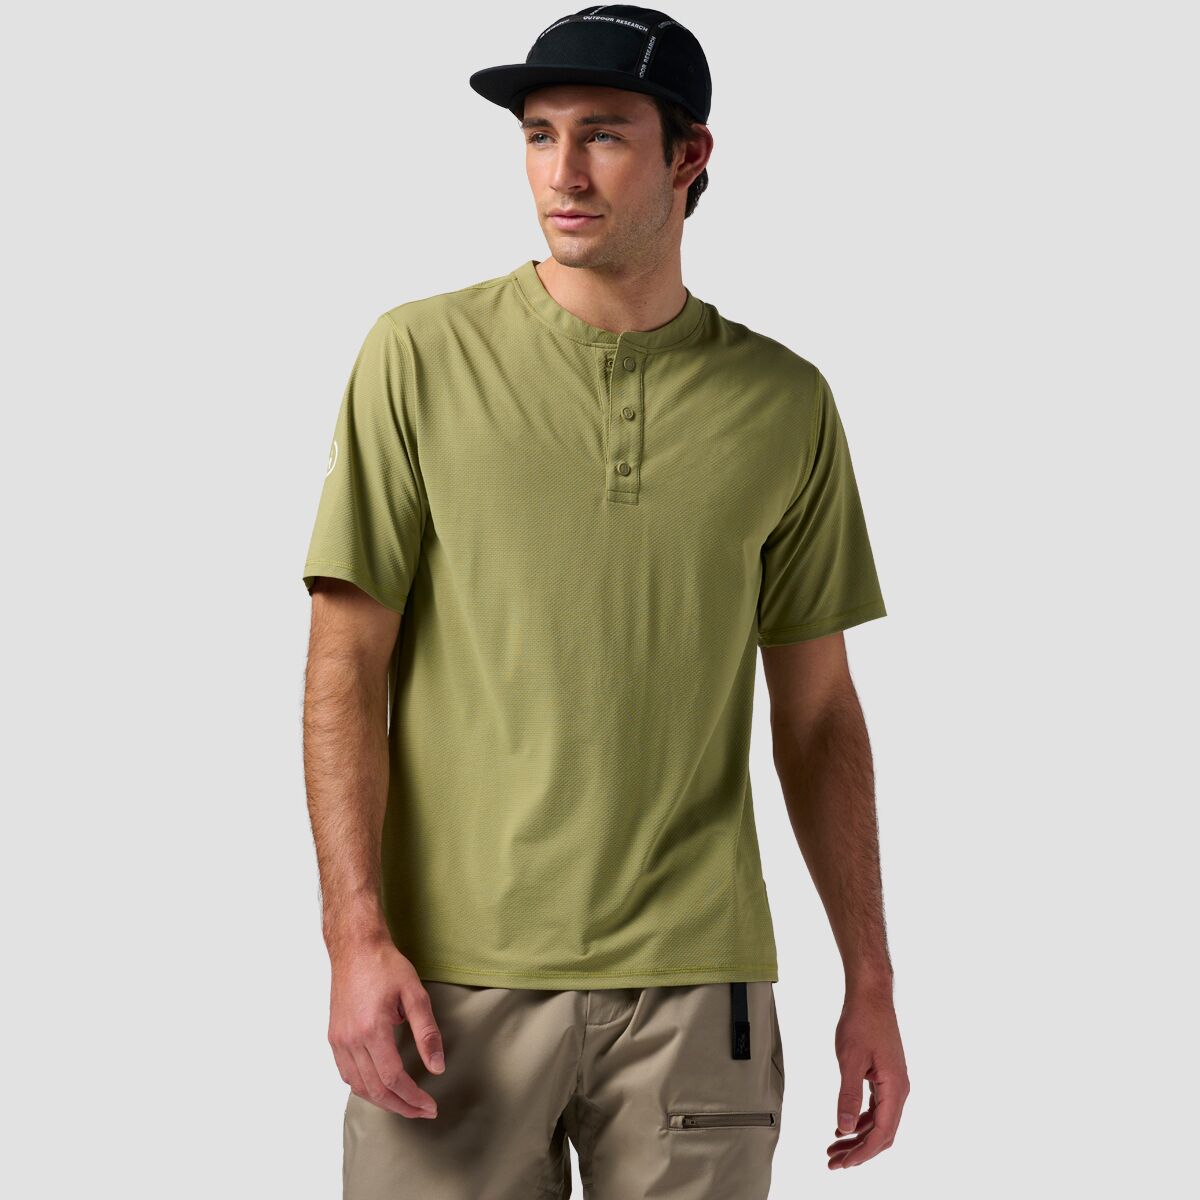 Backcountry Men's Tahoe Sun Henley Shirt - Size: XXL